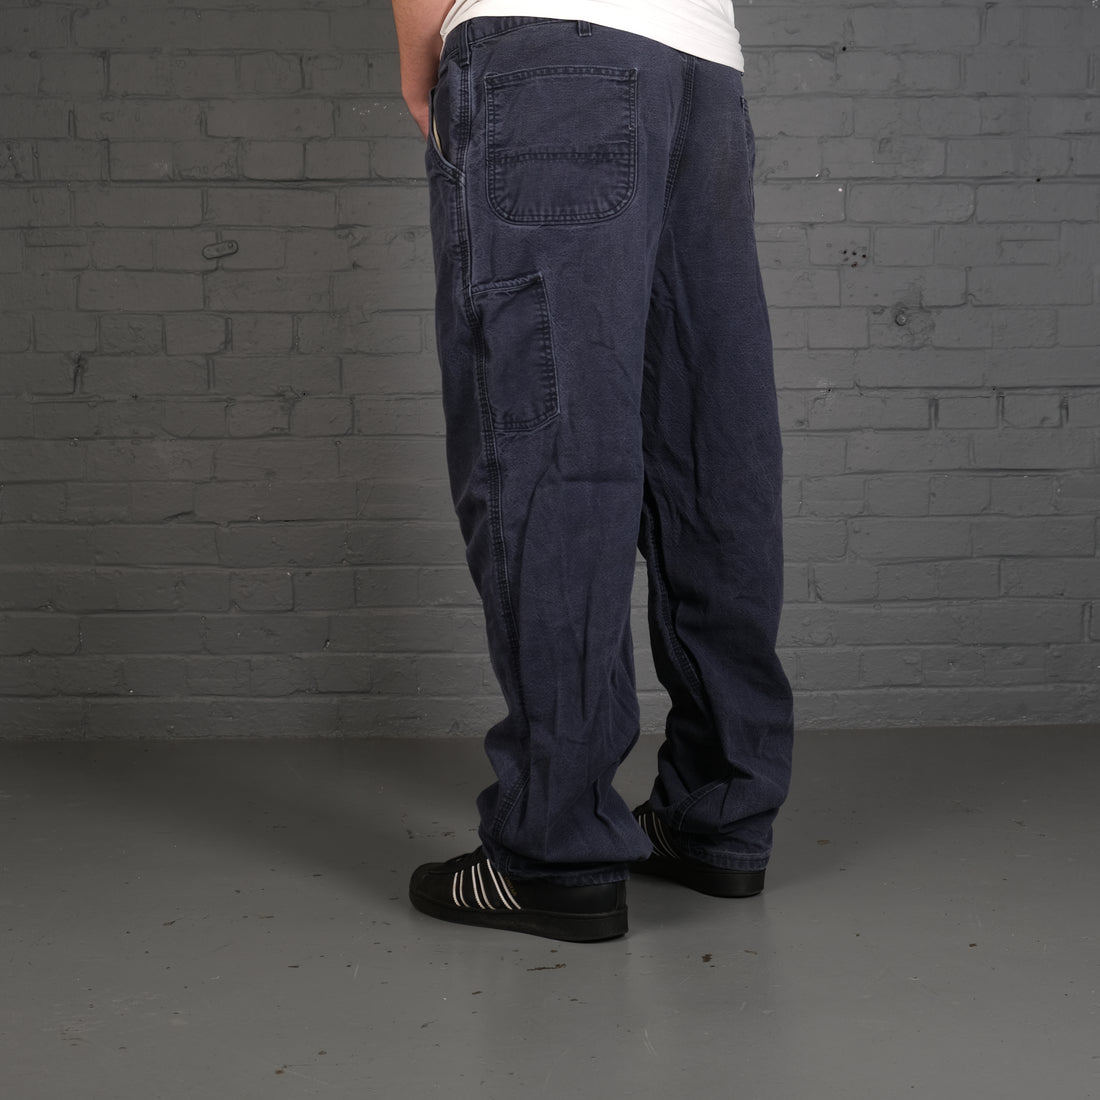 Vintage Carhartt Carpenter jeans in Navy